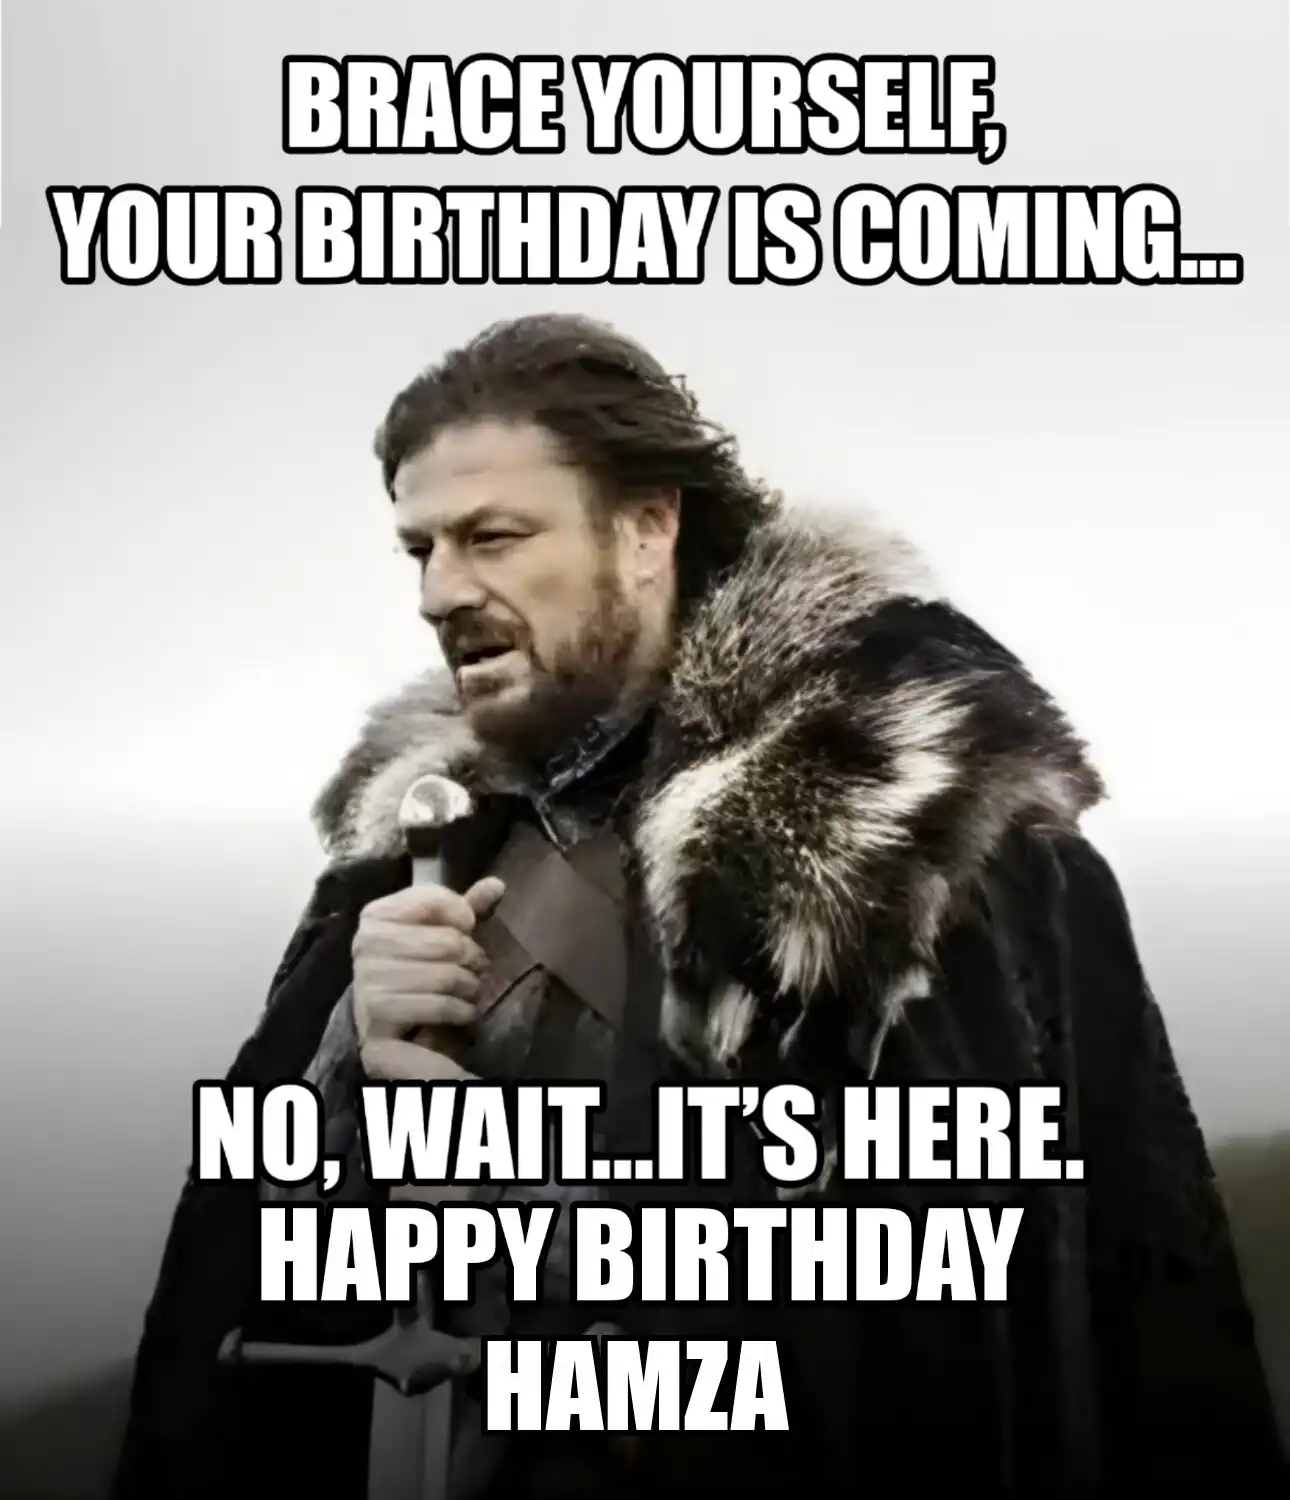 Happy Birthday Hamza Brace Yourself Your Birthday Is Coming Meme